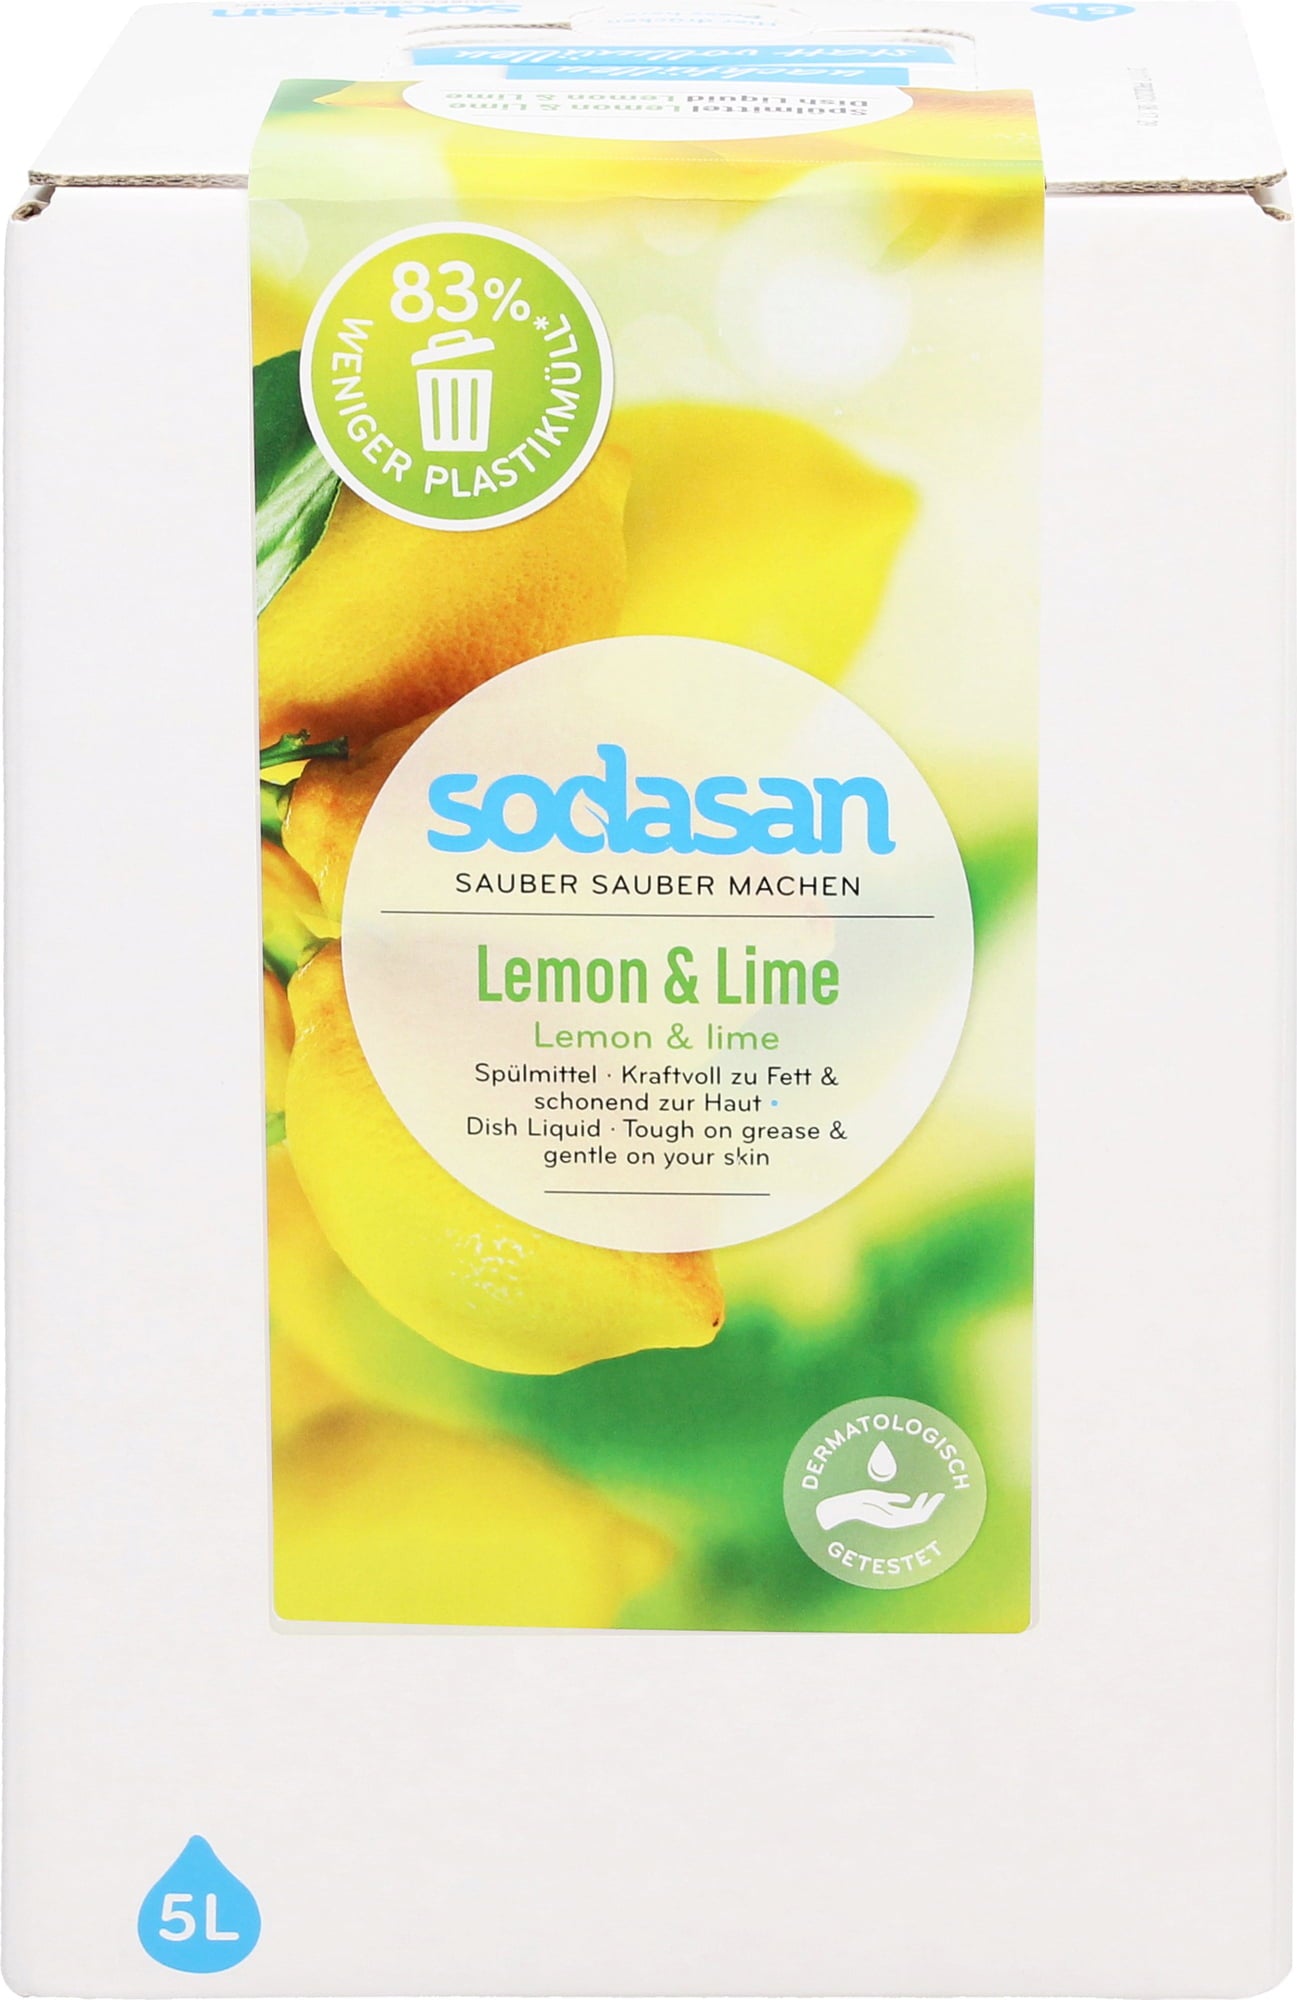 Spülmittel Lemon & Lime von Sodasan